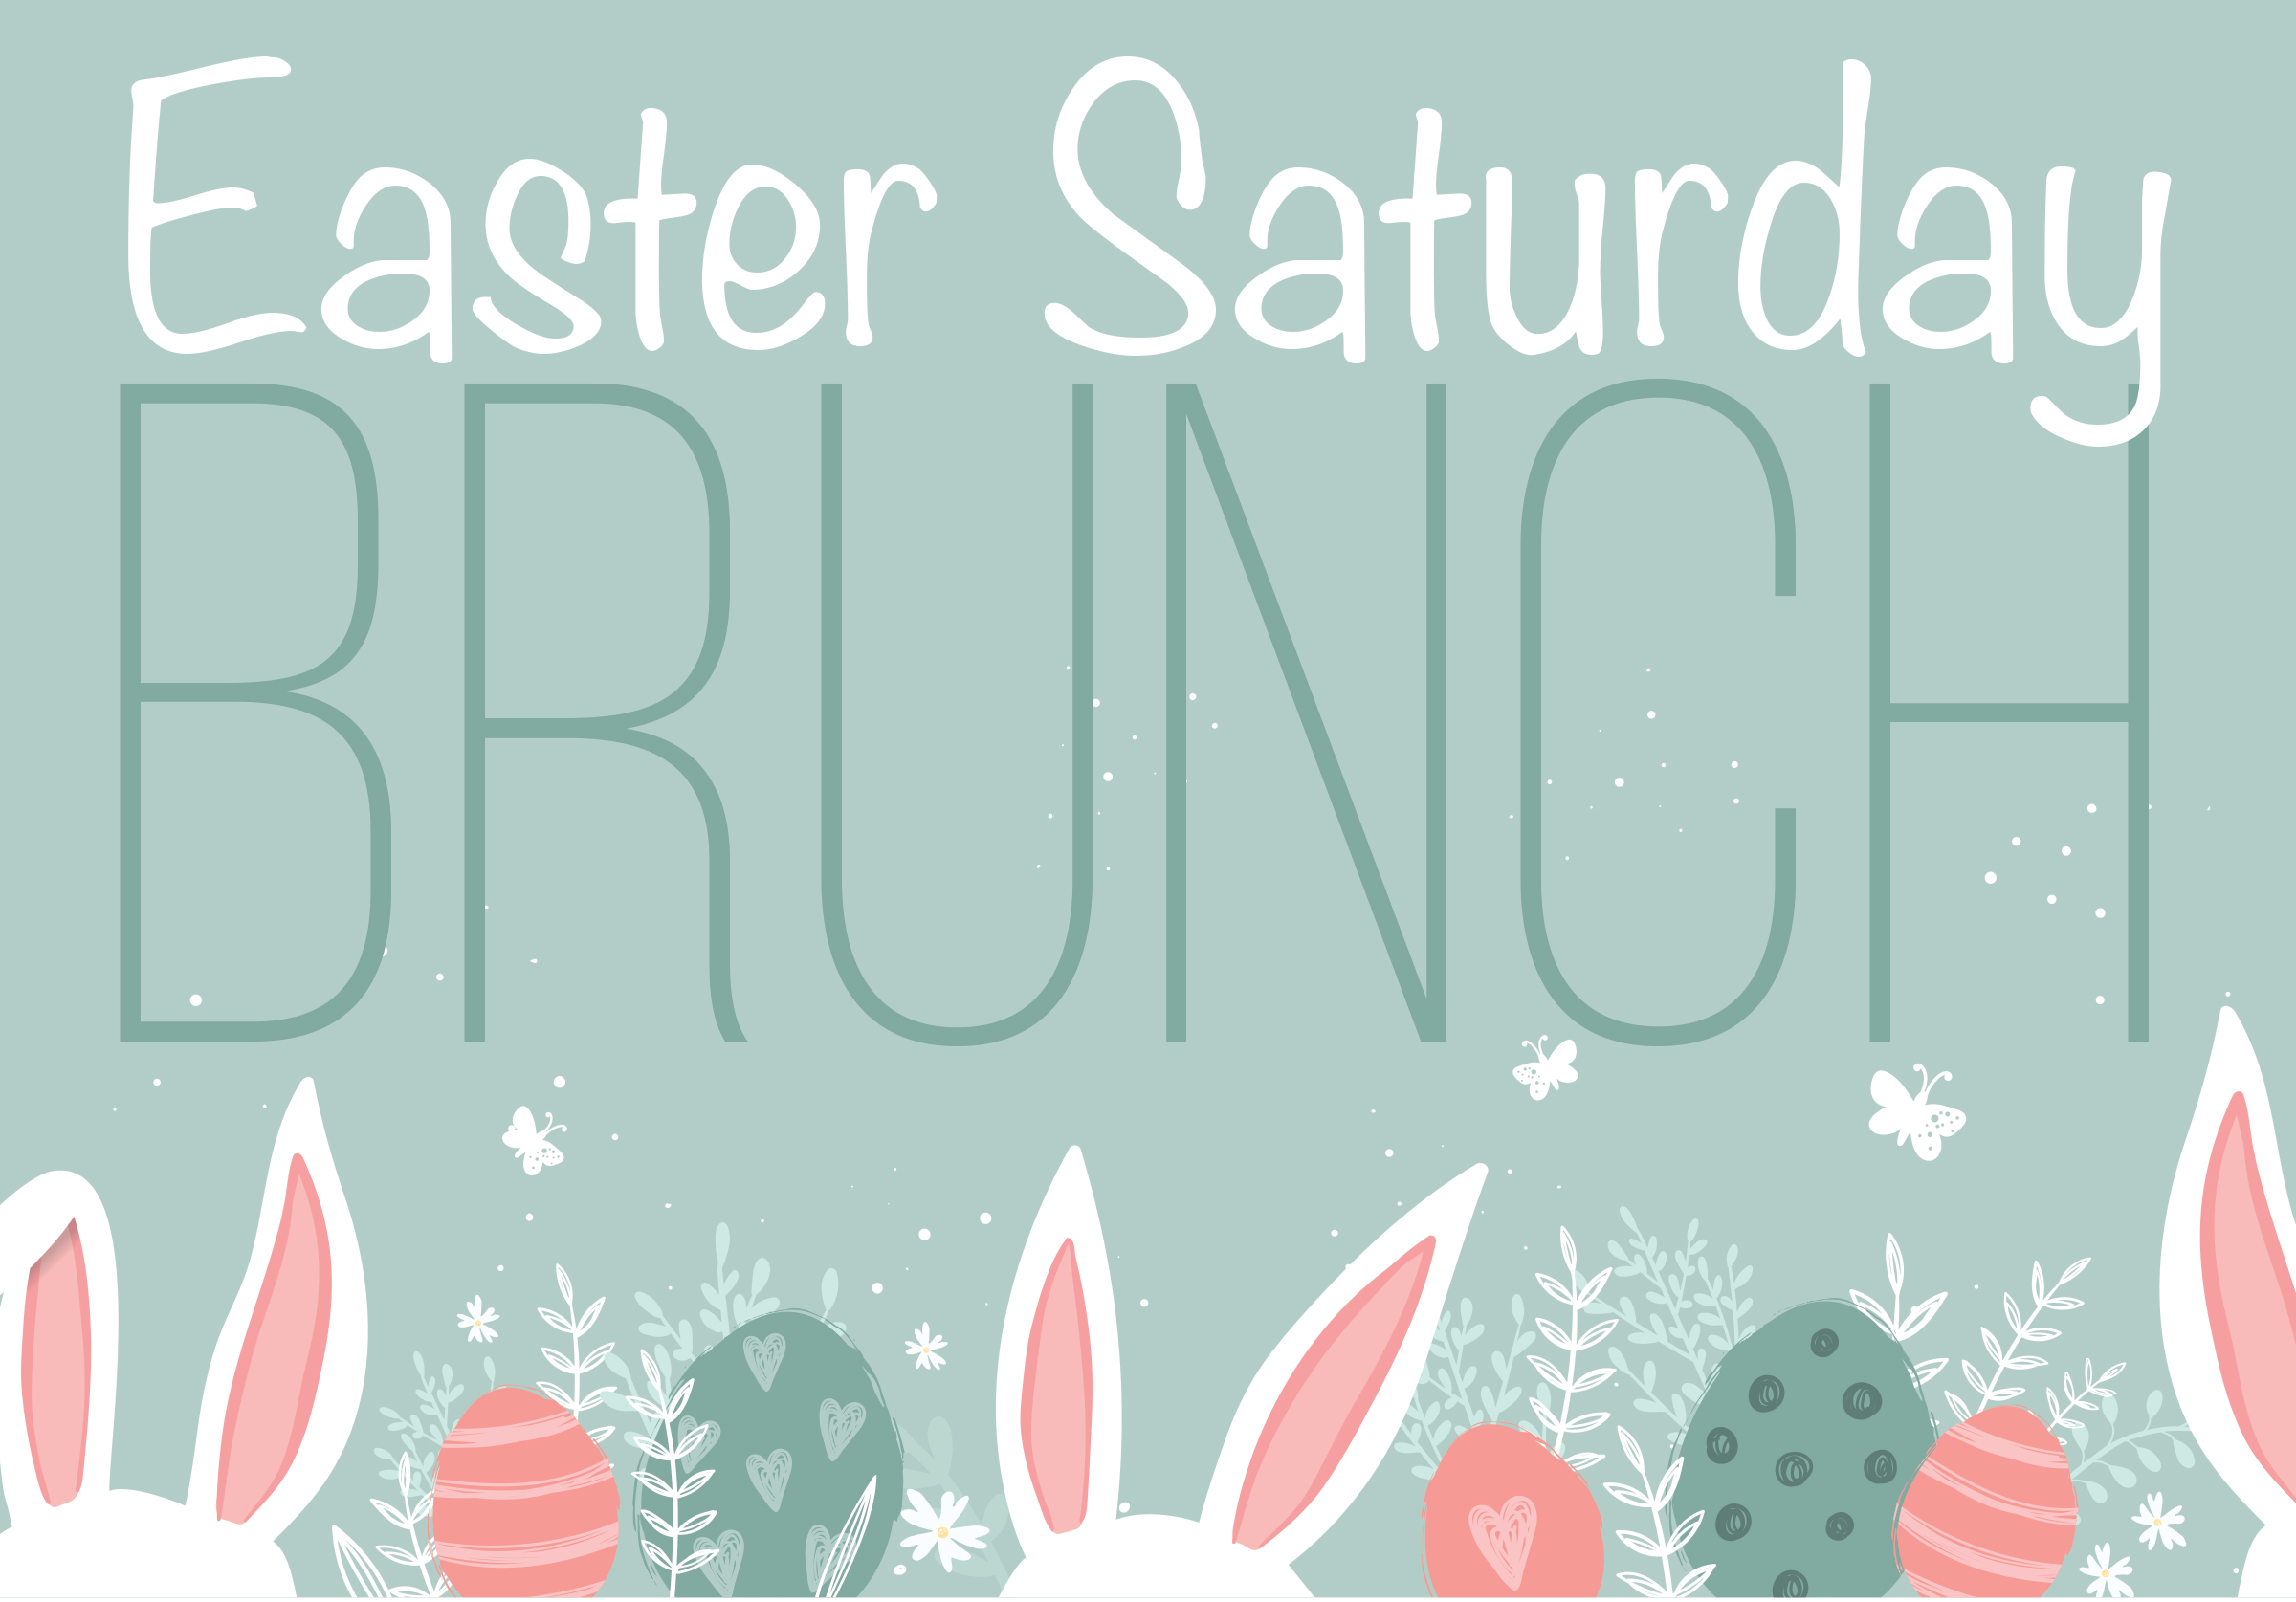 Easter Saturday Brunch